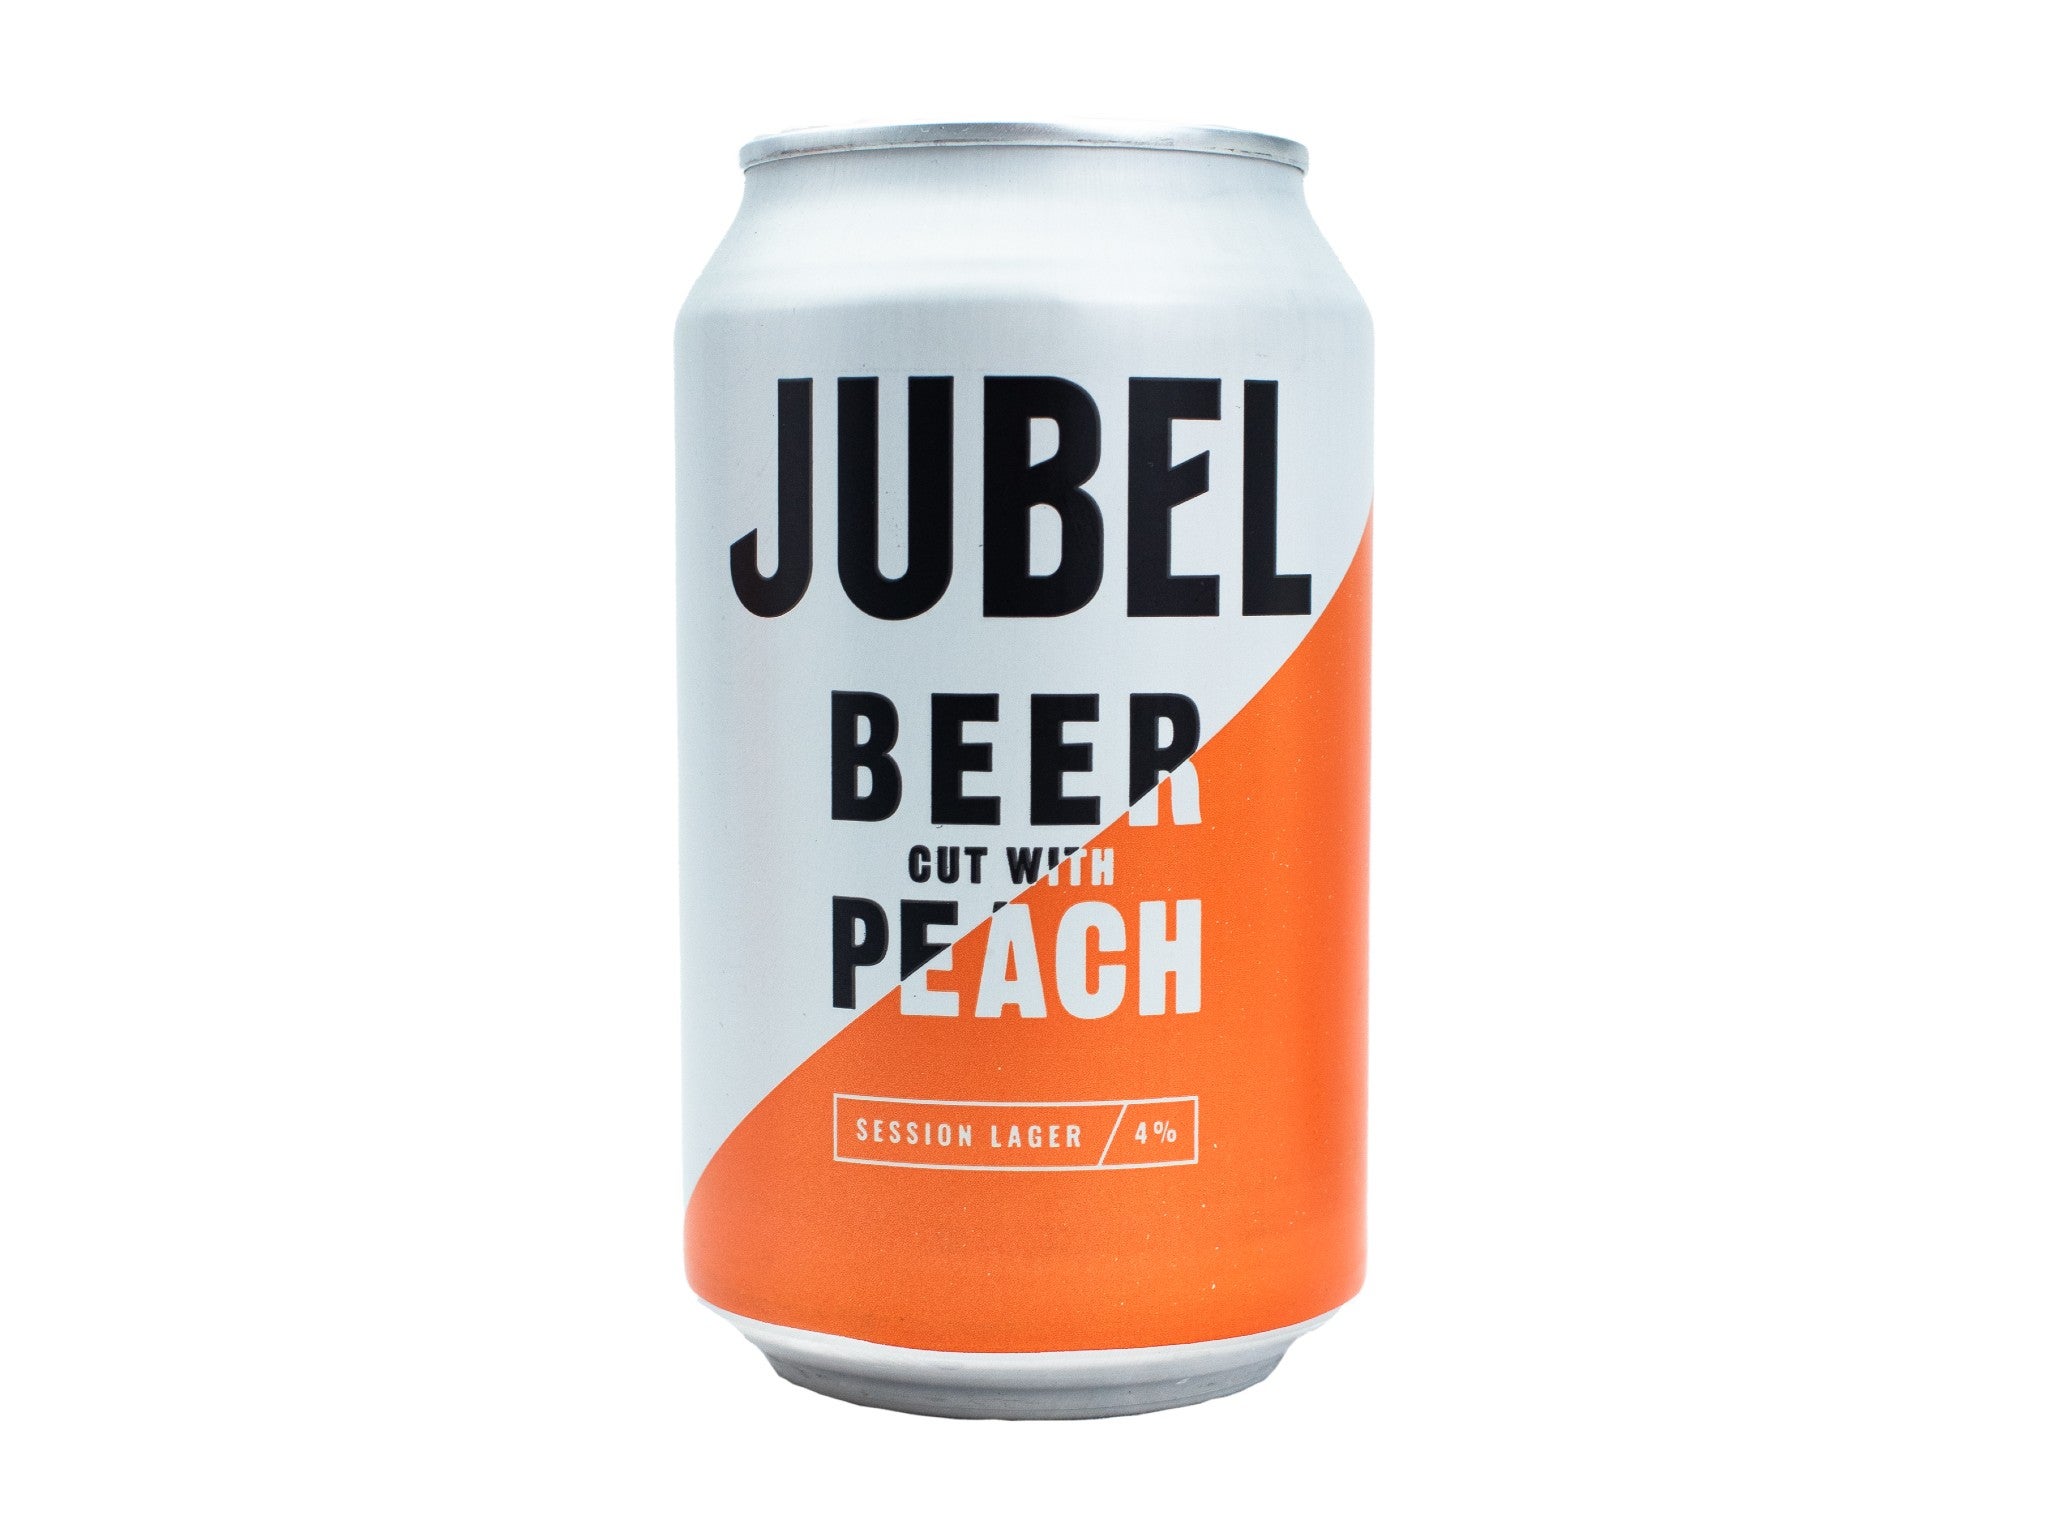 Jubel beer cut with peach indybest.jpeg